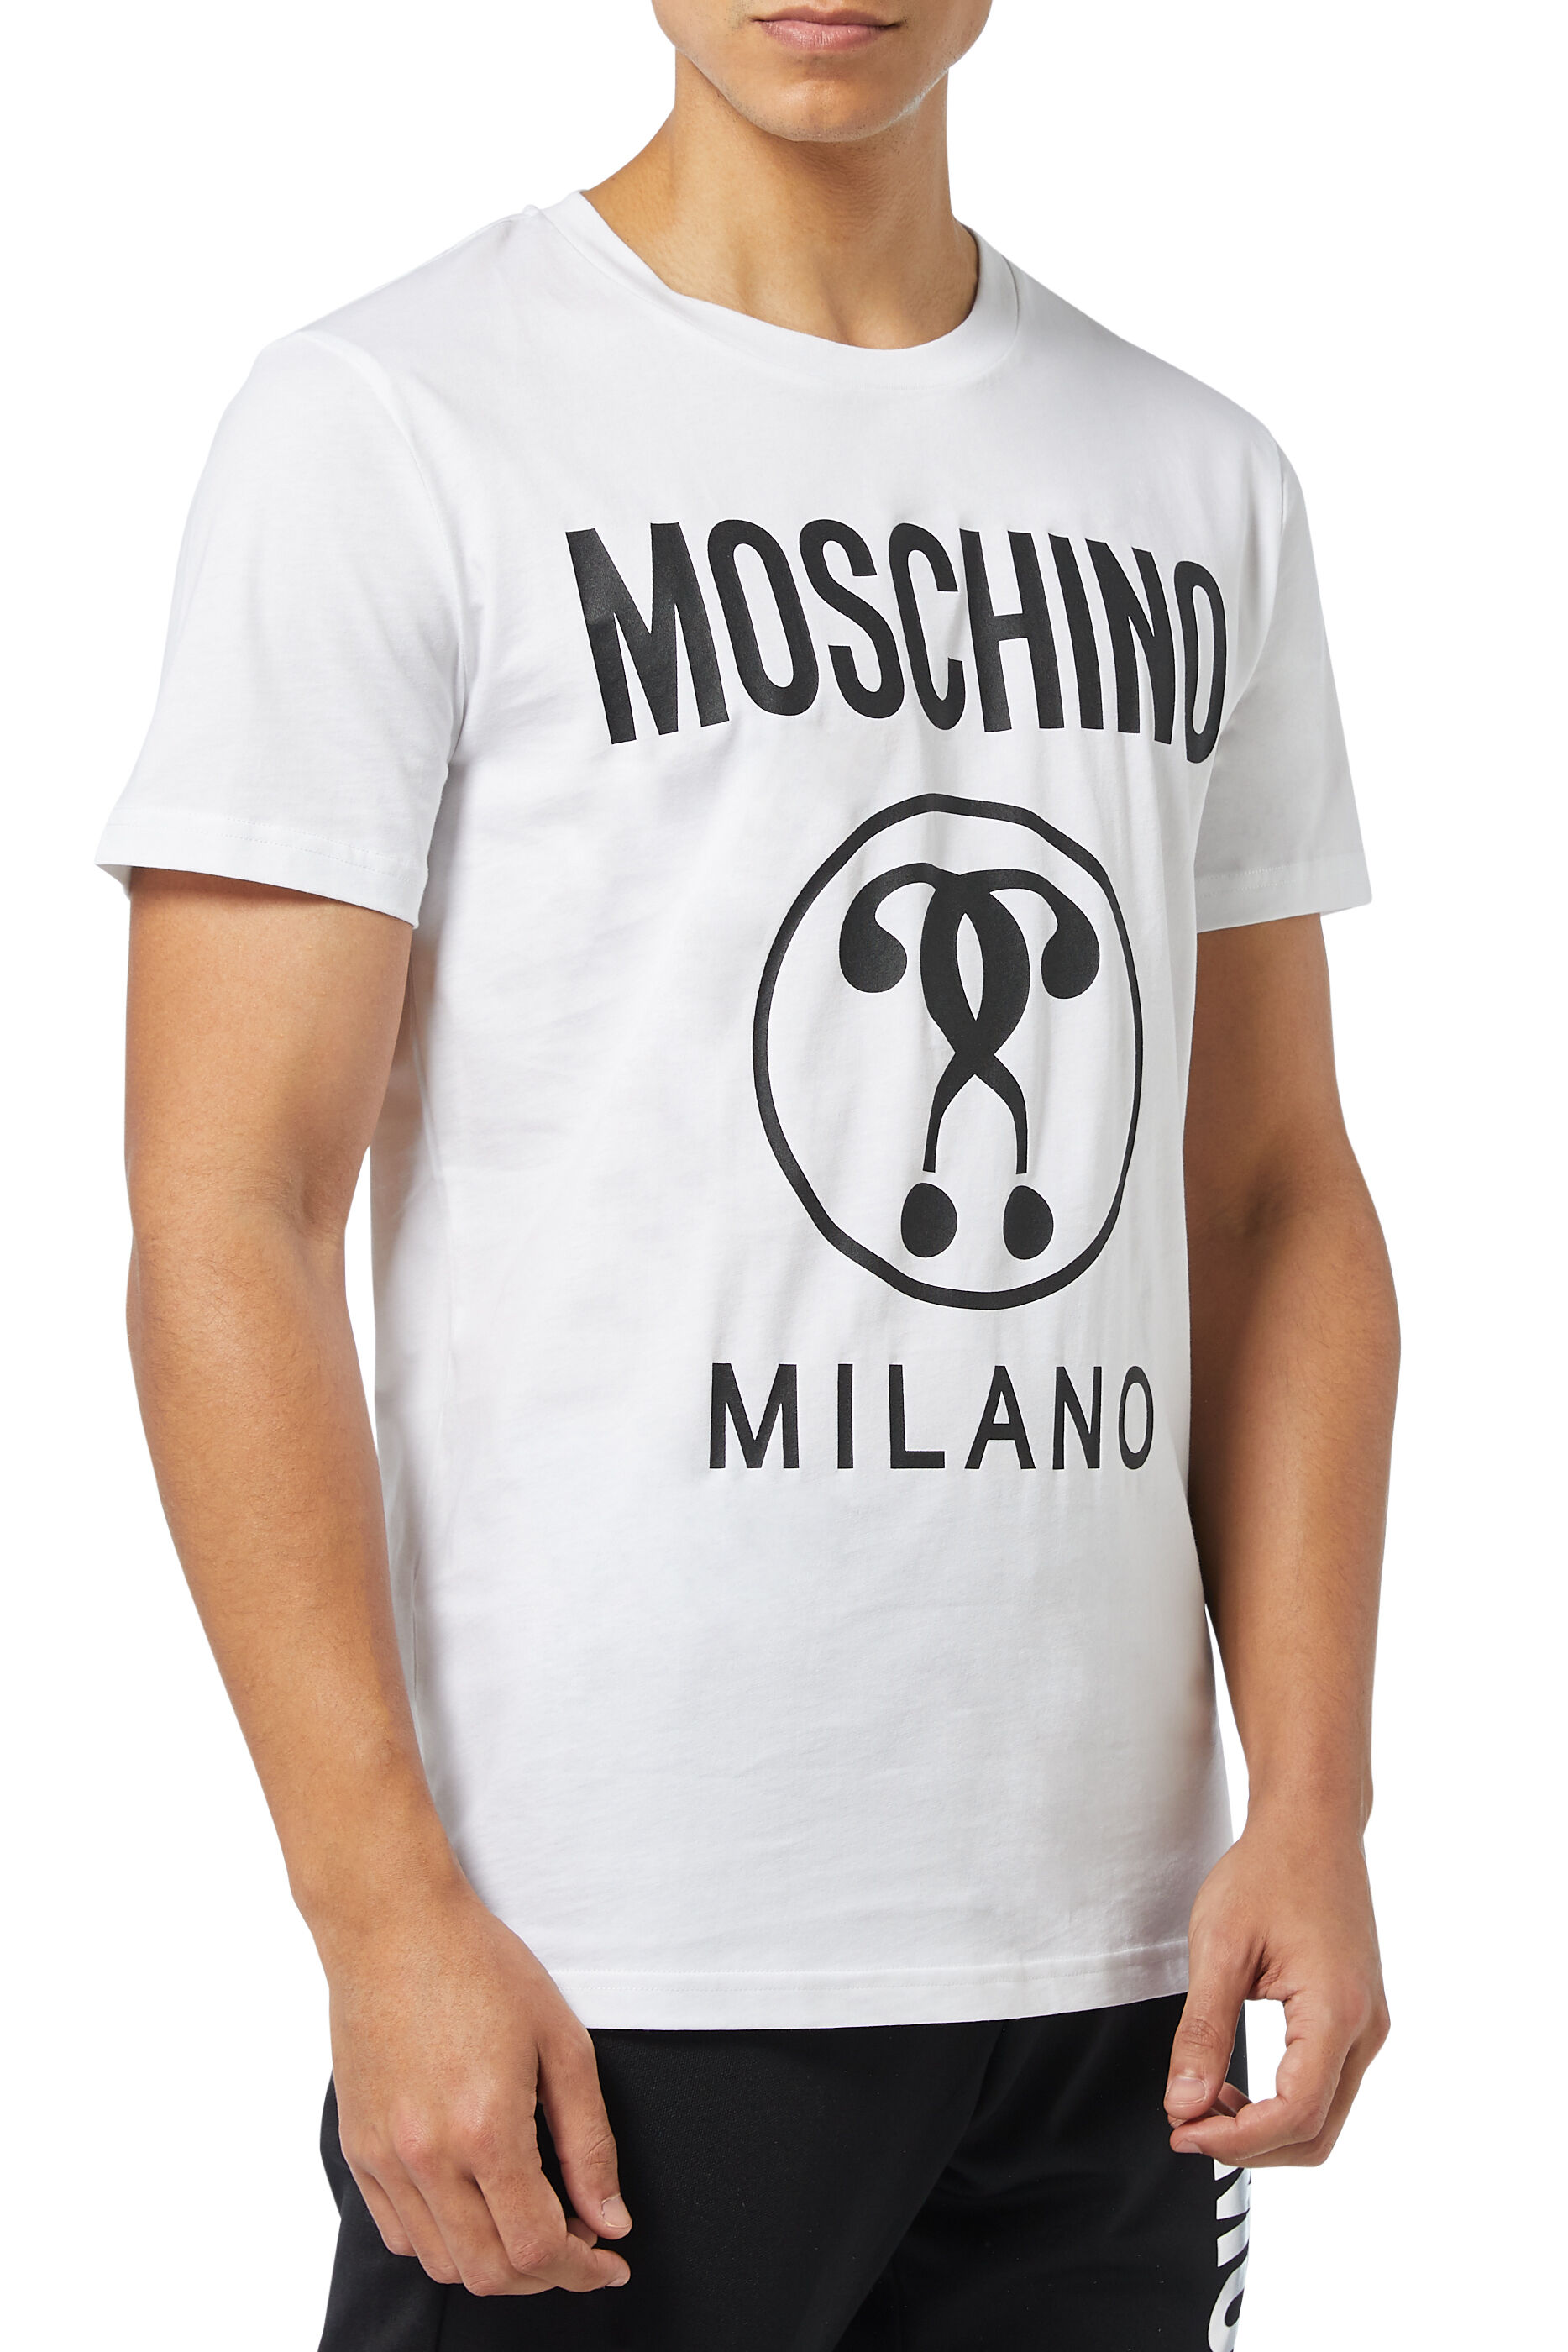 moschino question mark t shirt